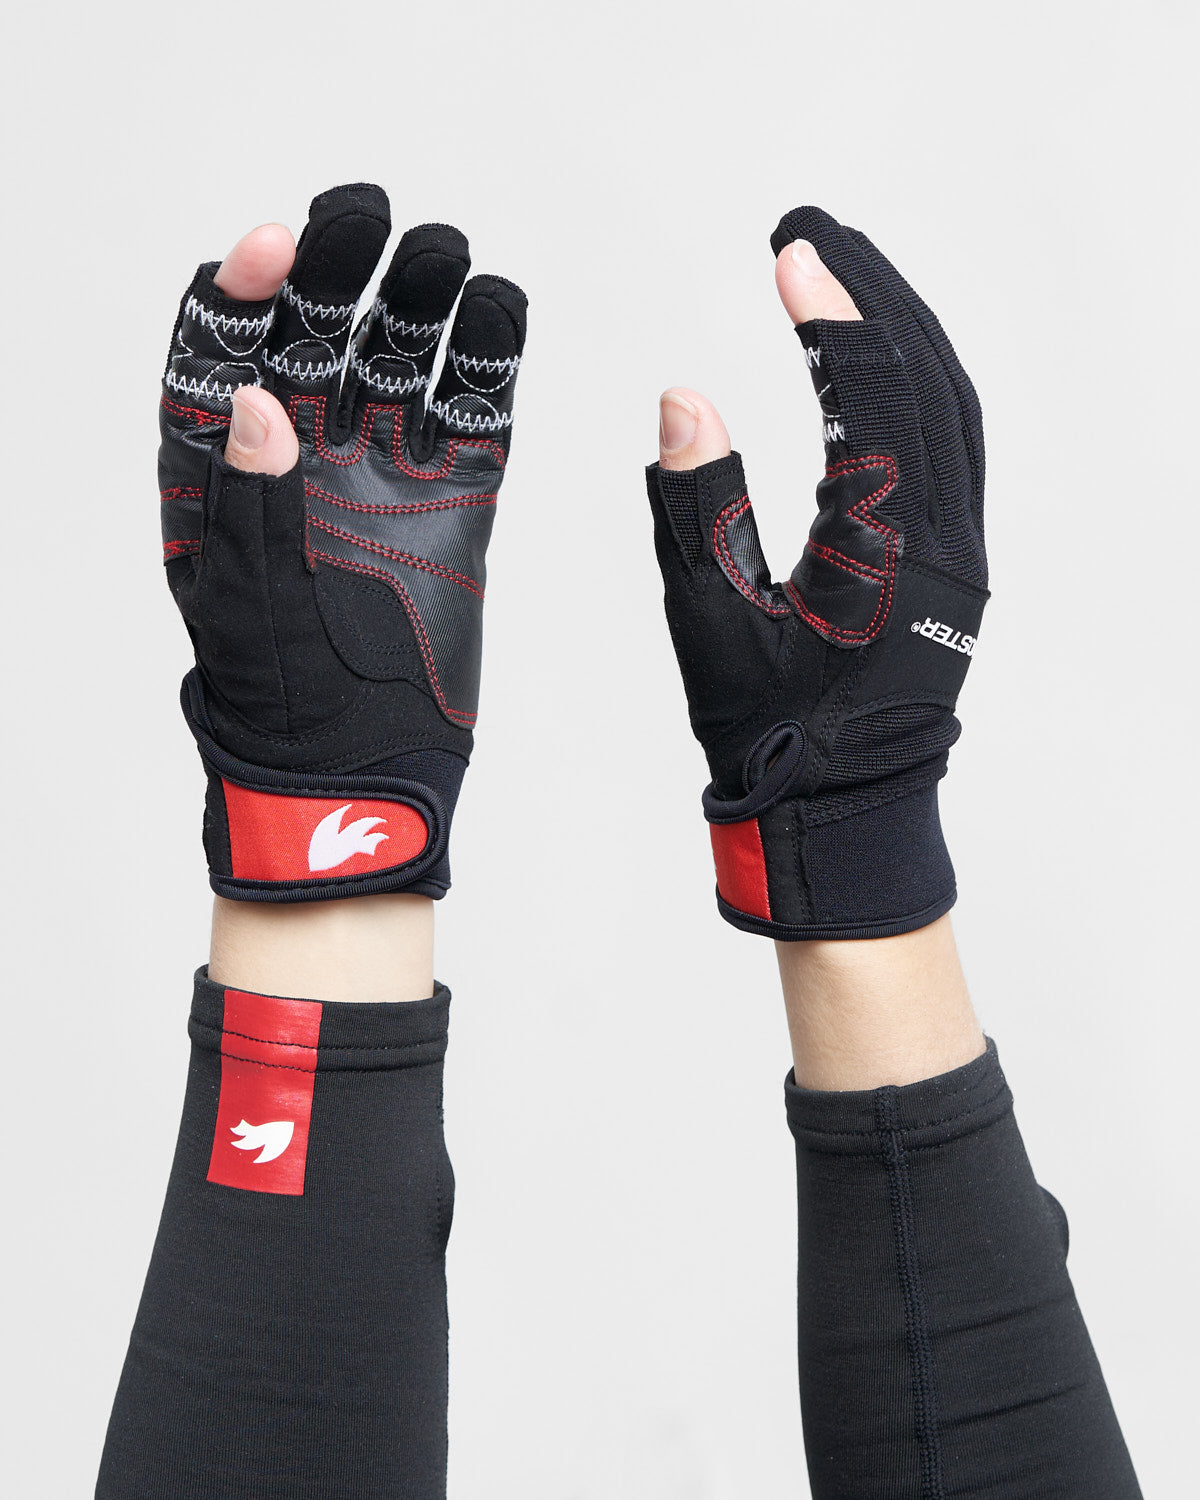 Rooster Pro Race 2-open-finger Gloves